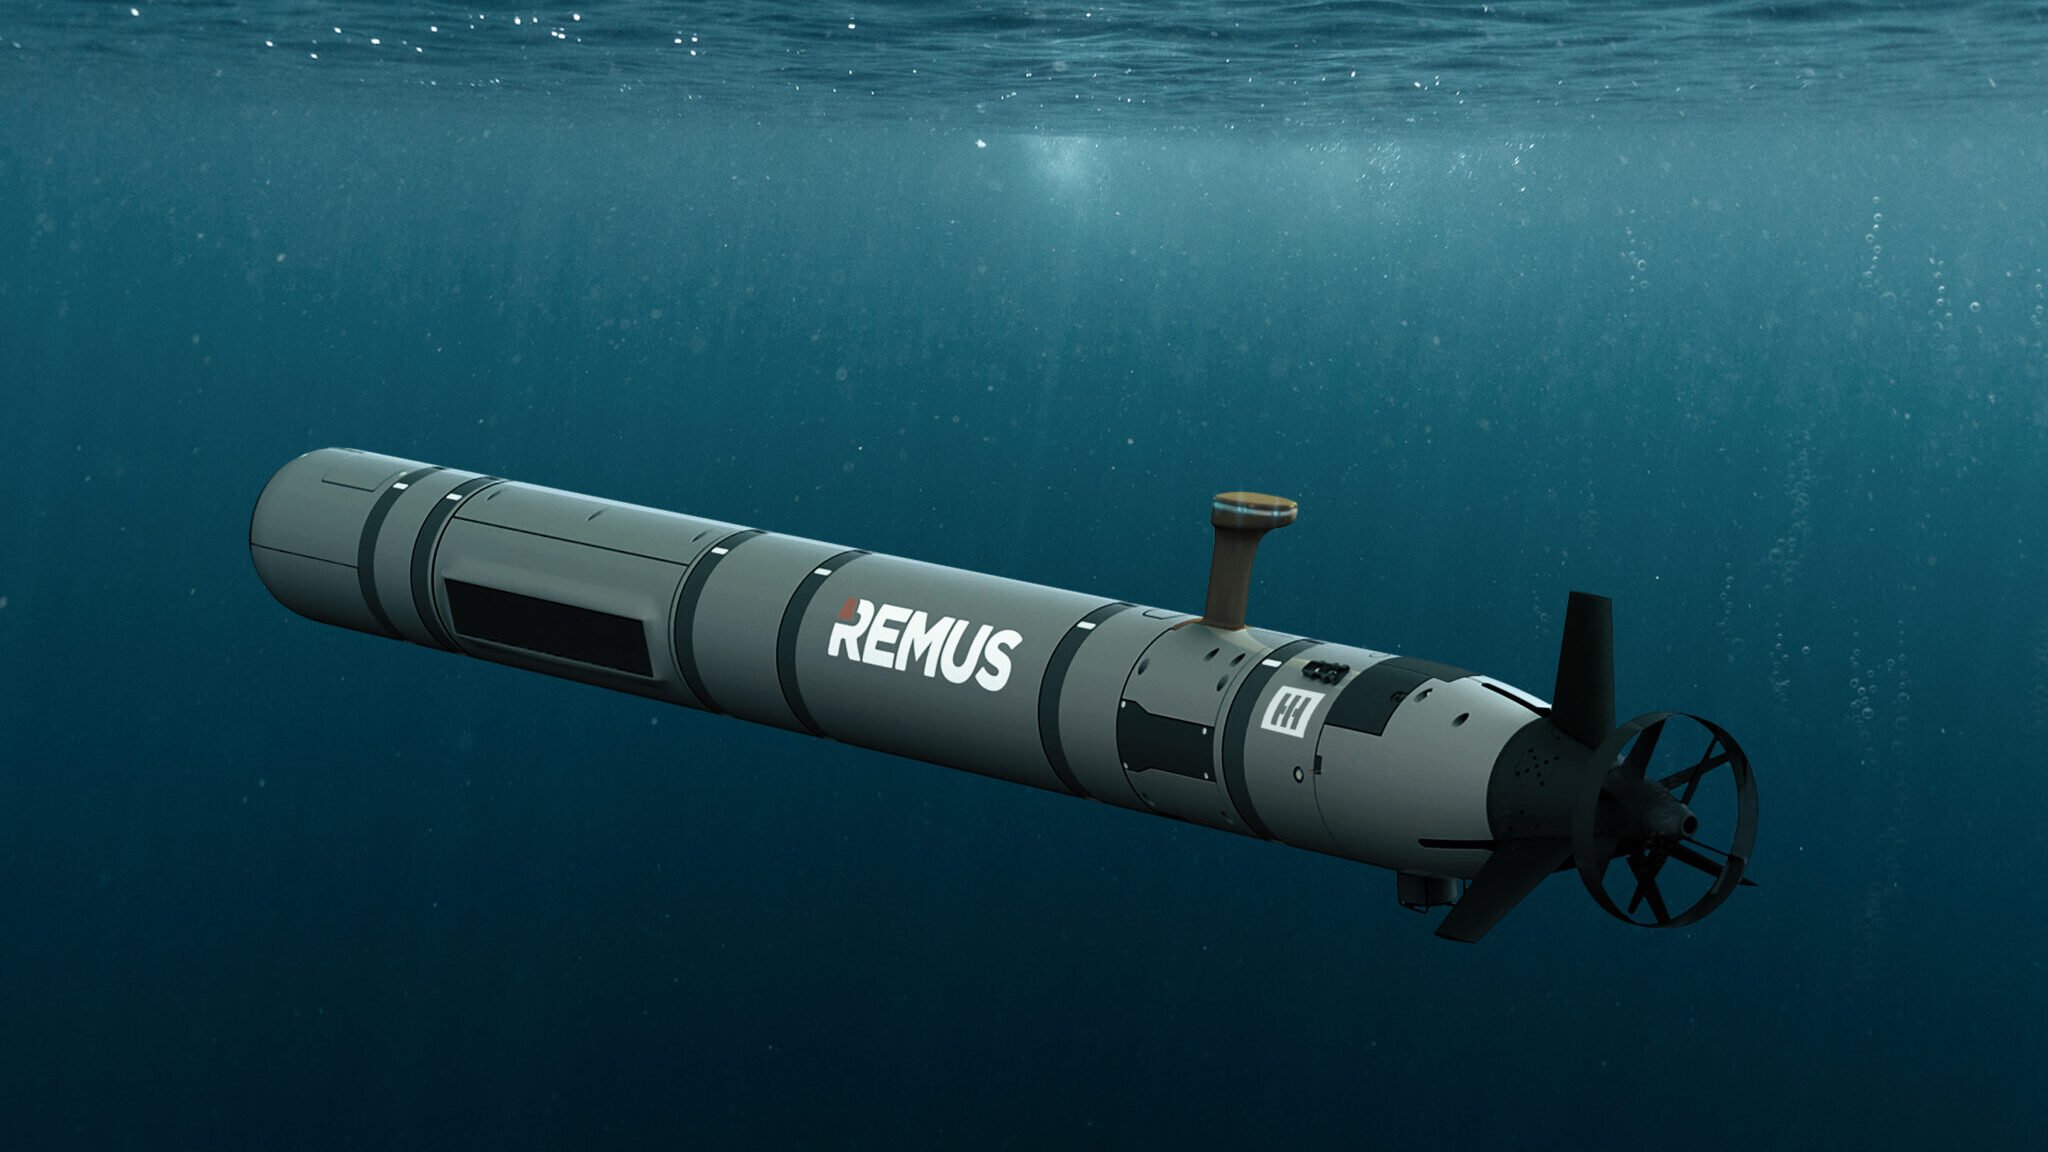 HII unveils next undersea drone, the Remus 620